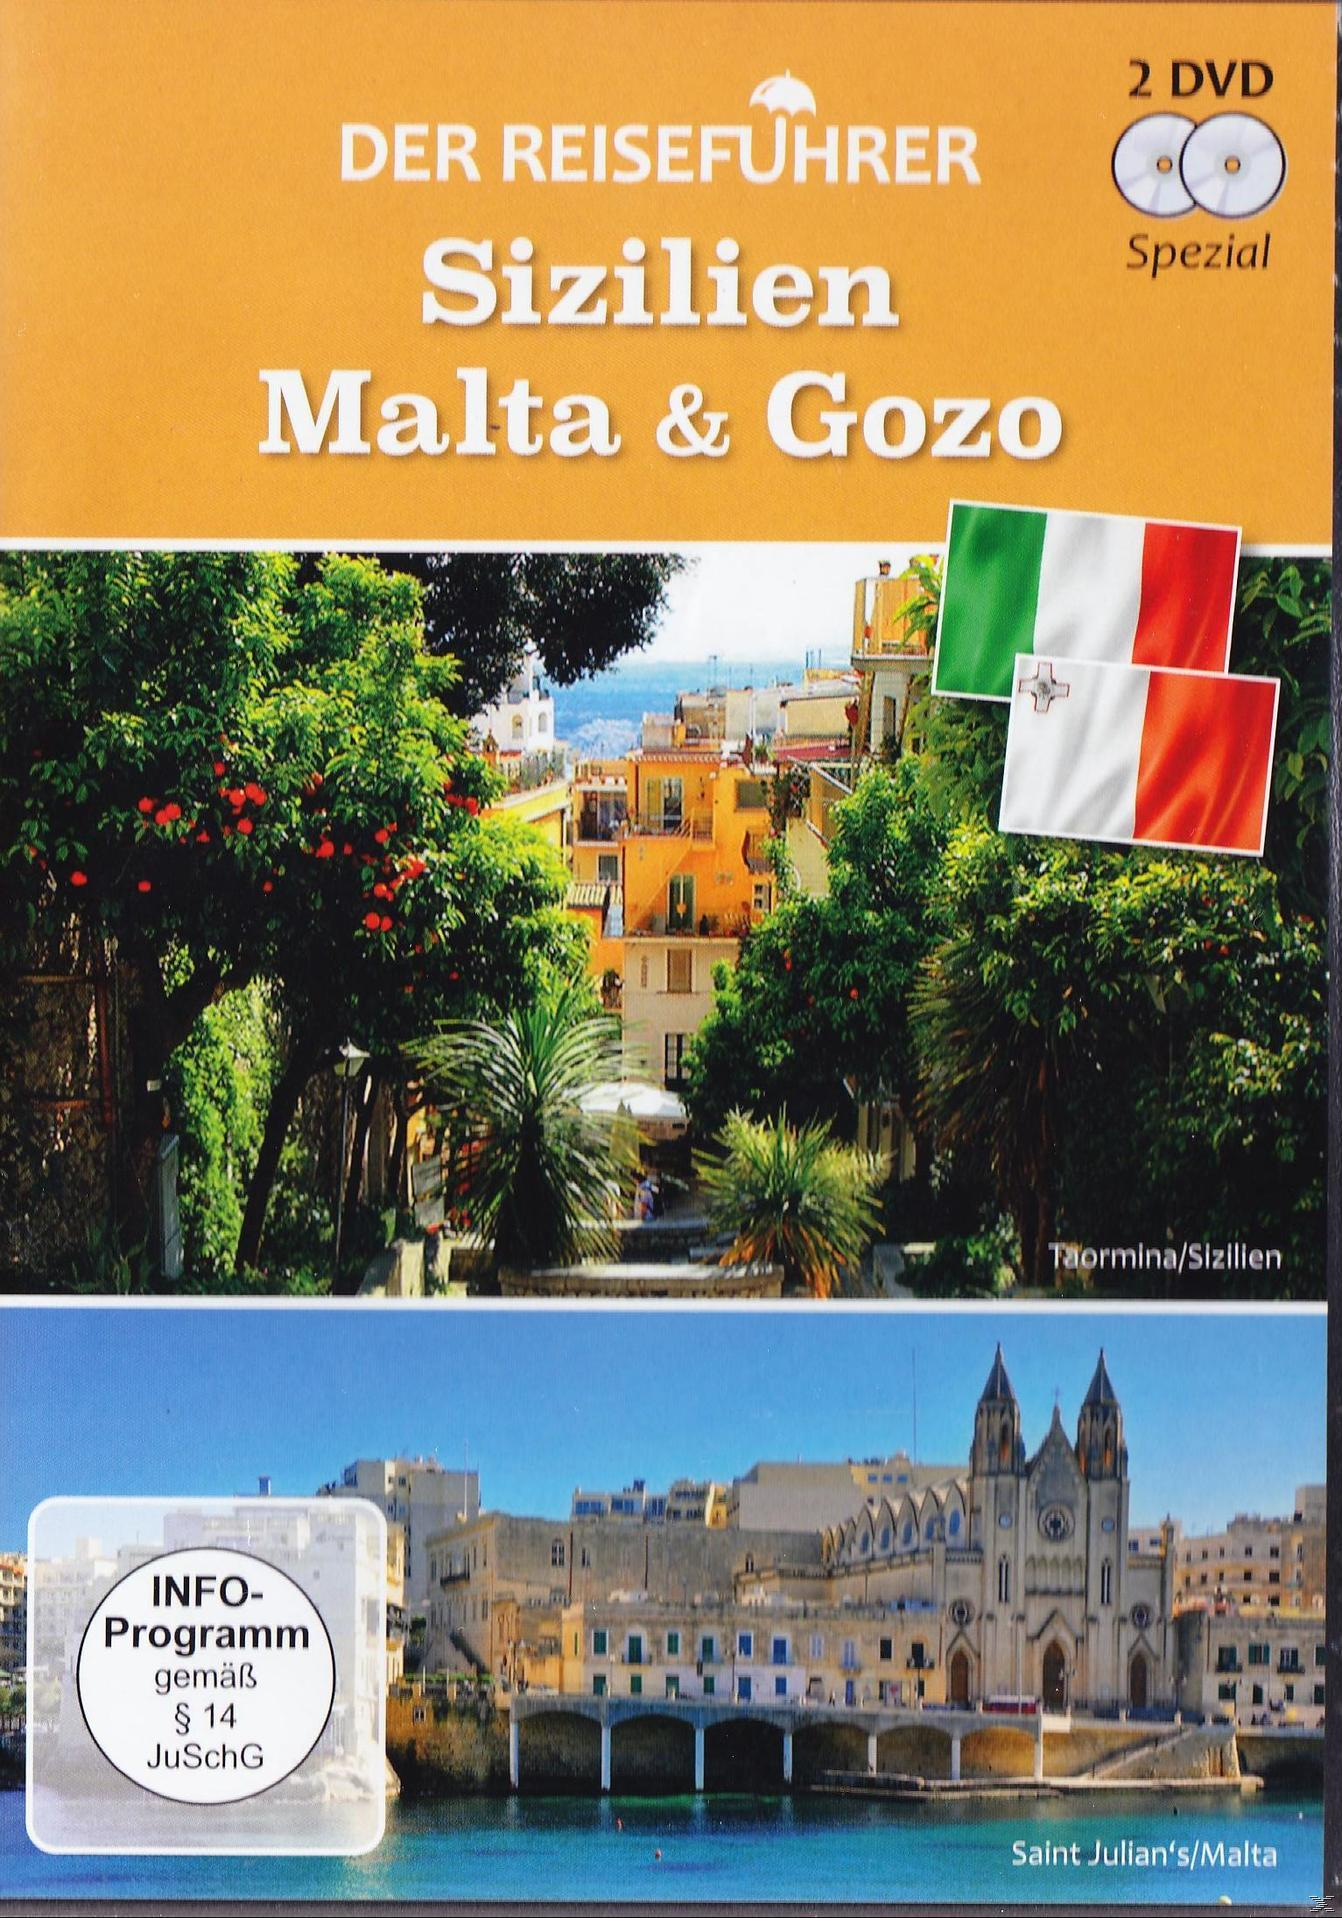 Der Reiseführer - Sizilien, & Malta Gozo DVD